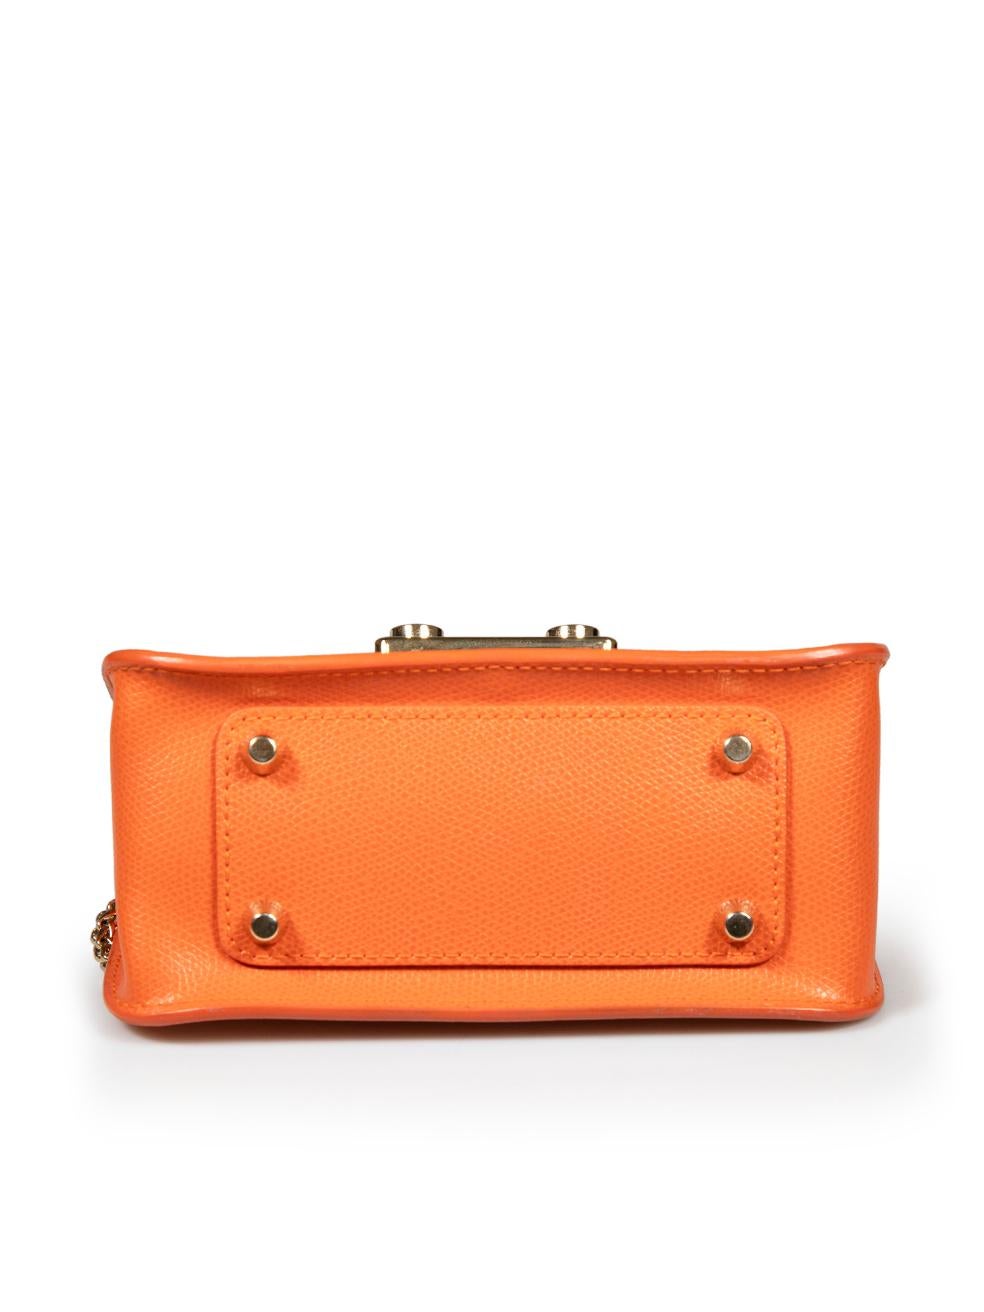 Women's Furla Orange Leather Metropolis Small Crossbody Bag For Sale